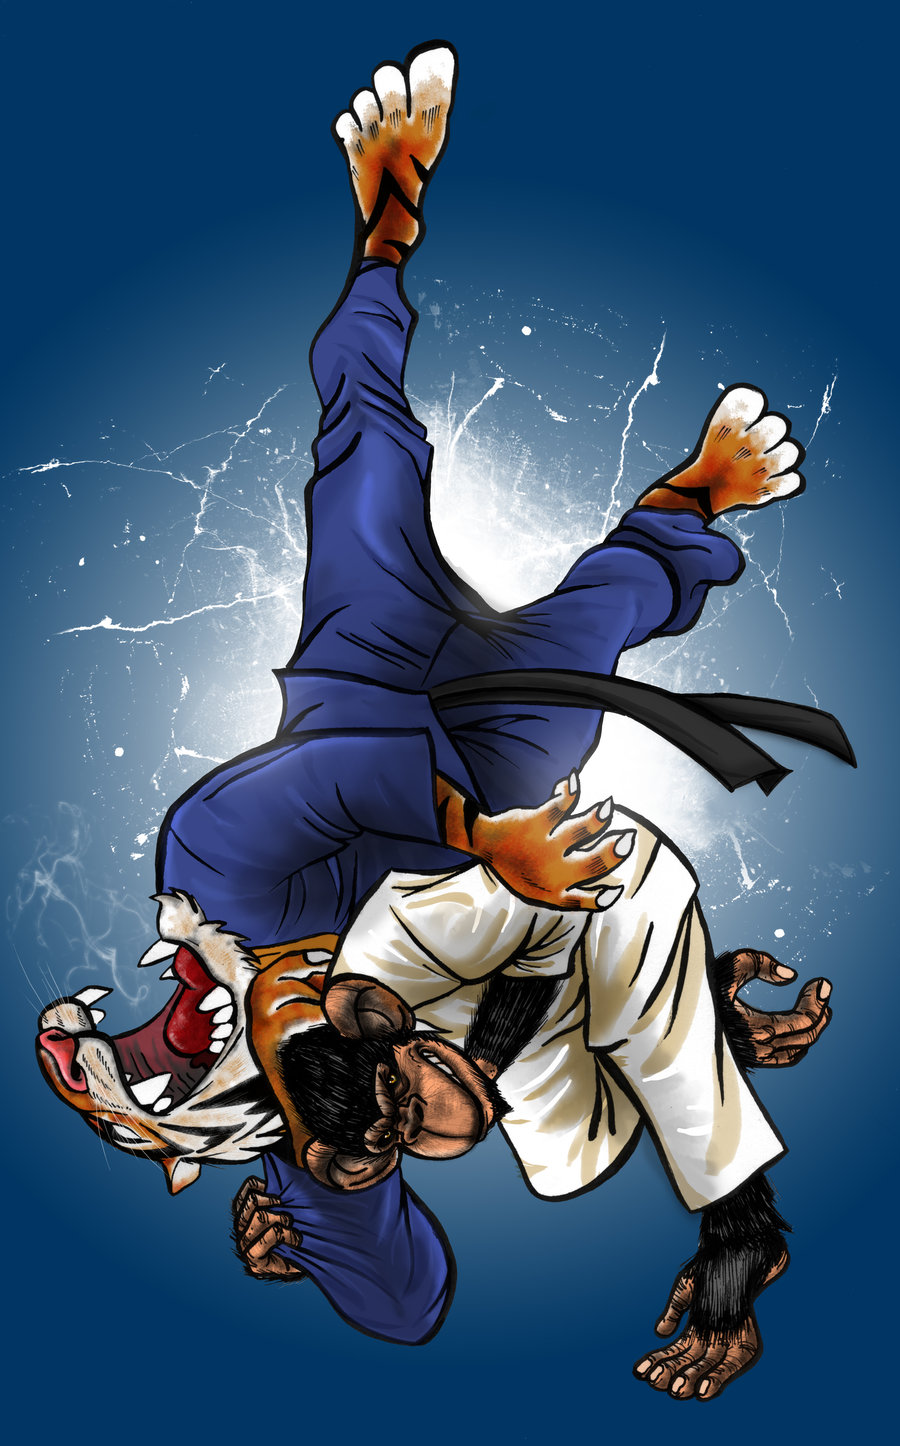 judo wallpaper - Google Search | flyers 4 inspiration | Pinterest